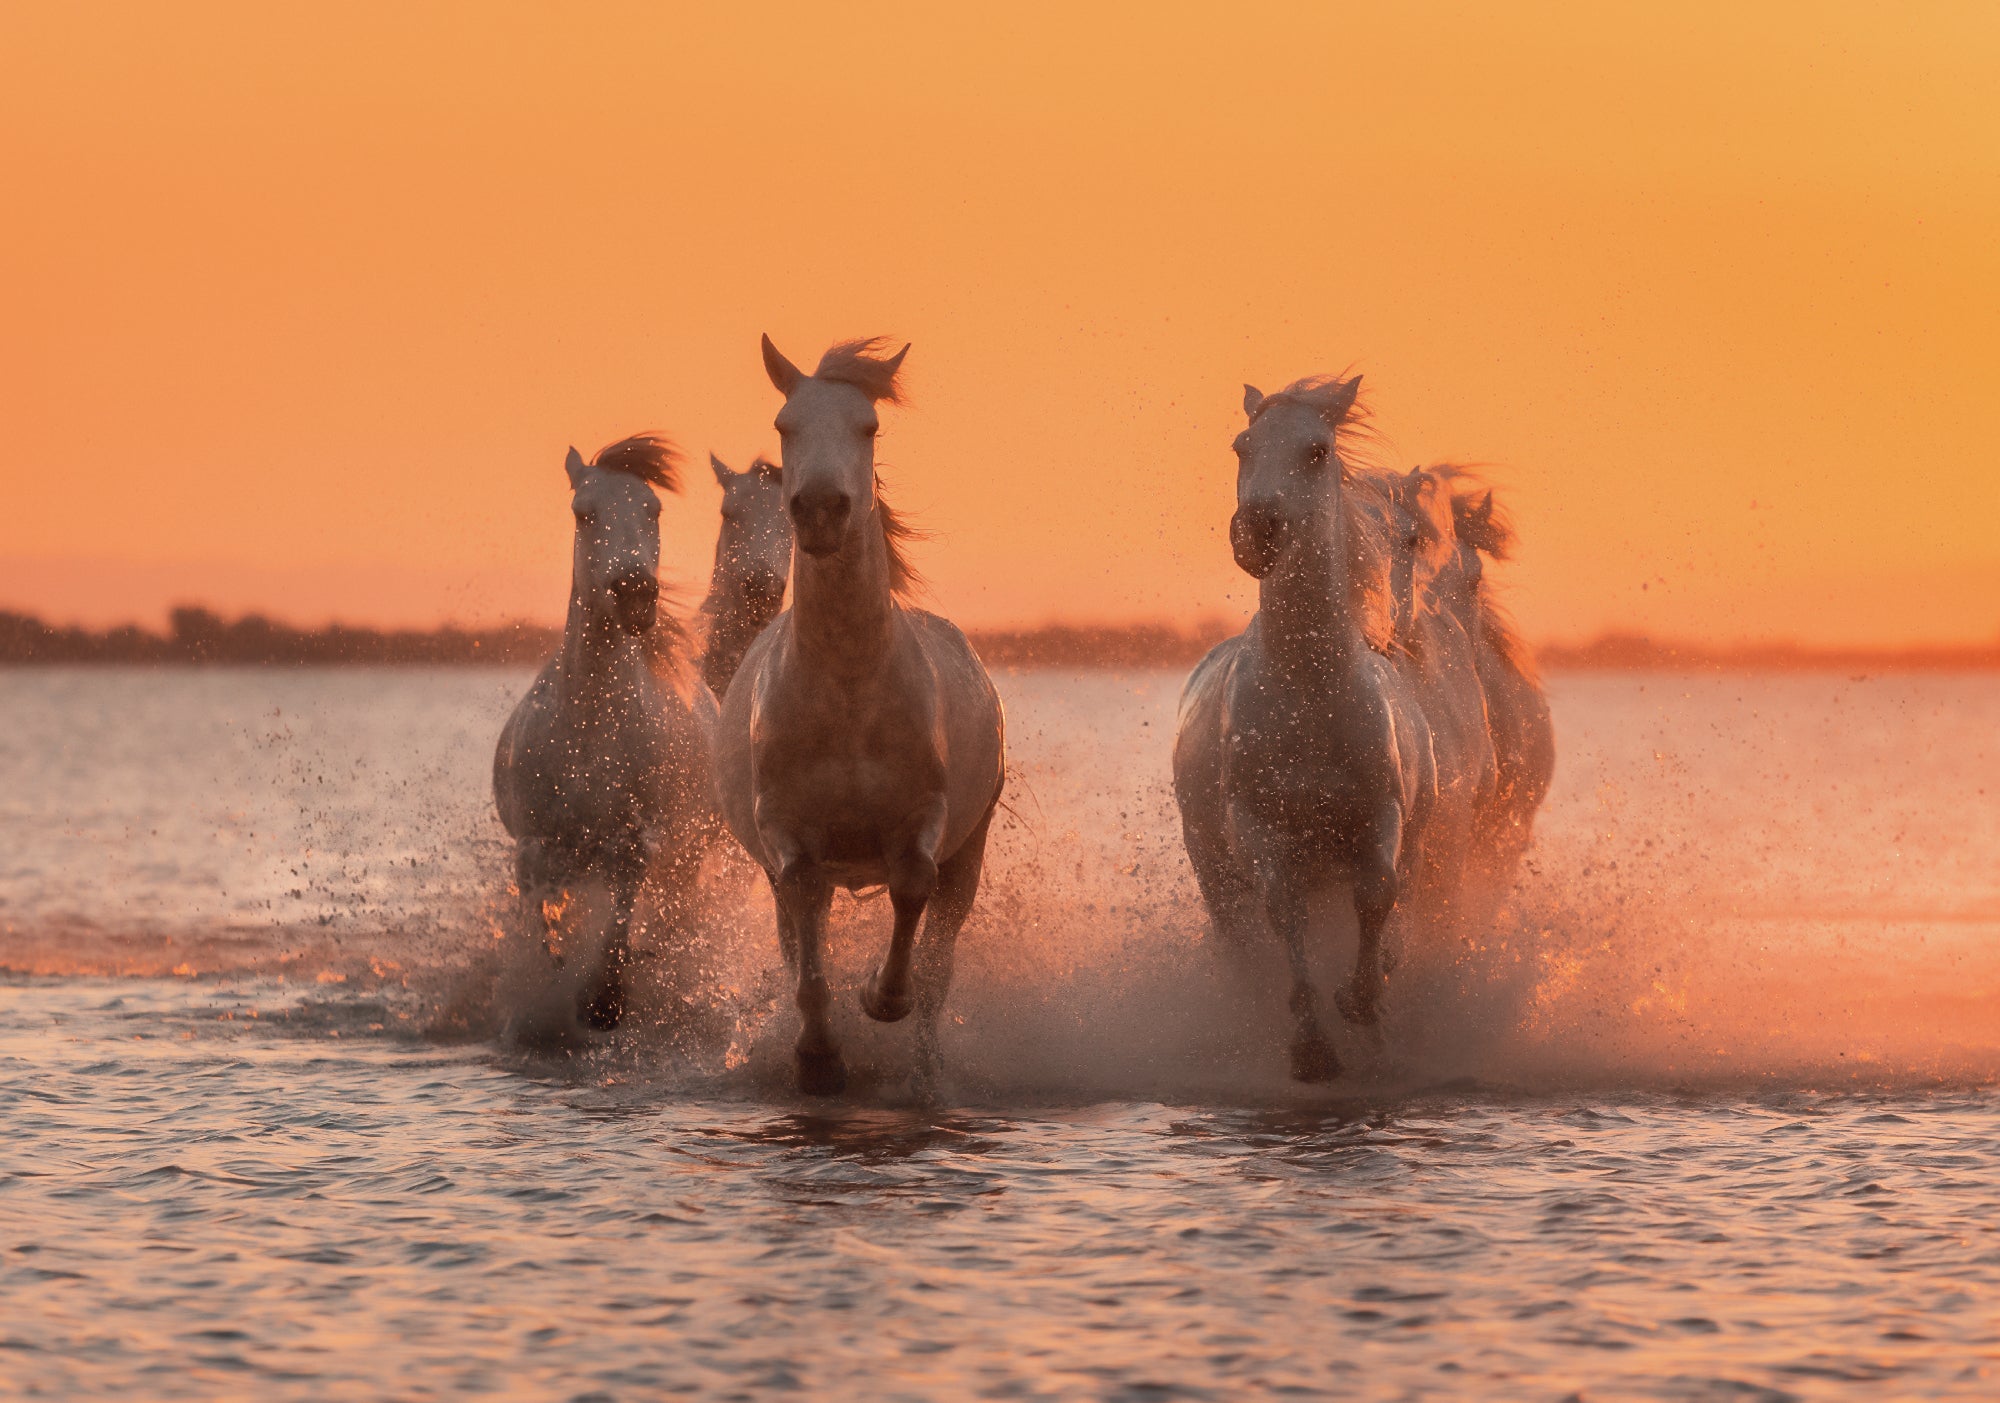 Sea Horses s image